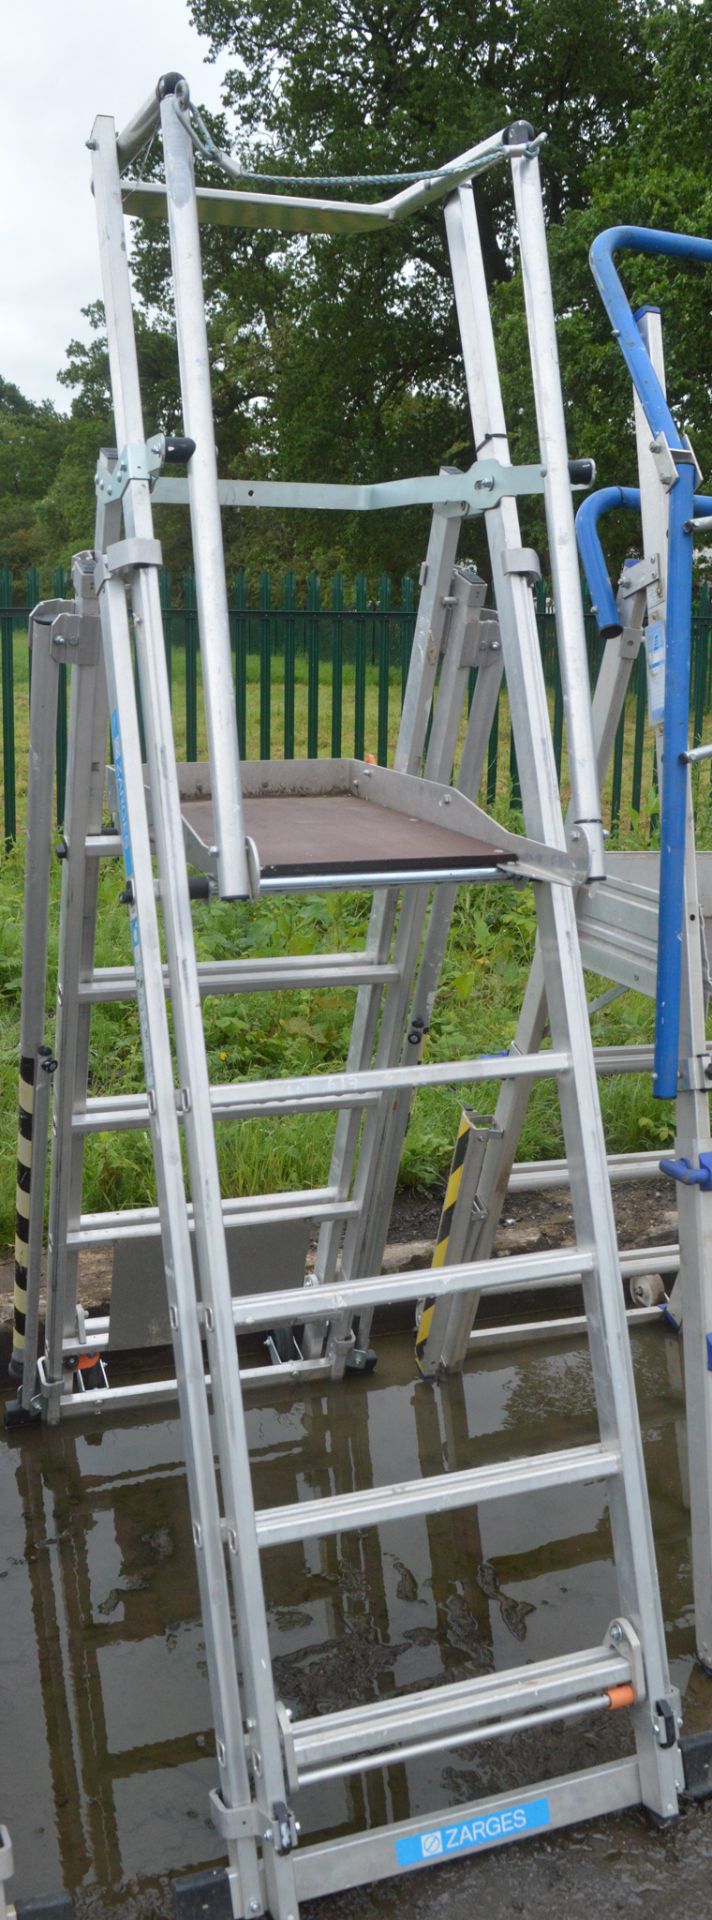 Zarges aluminium podium/step ladder A838302